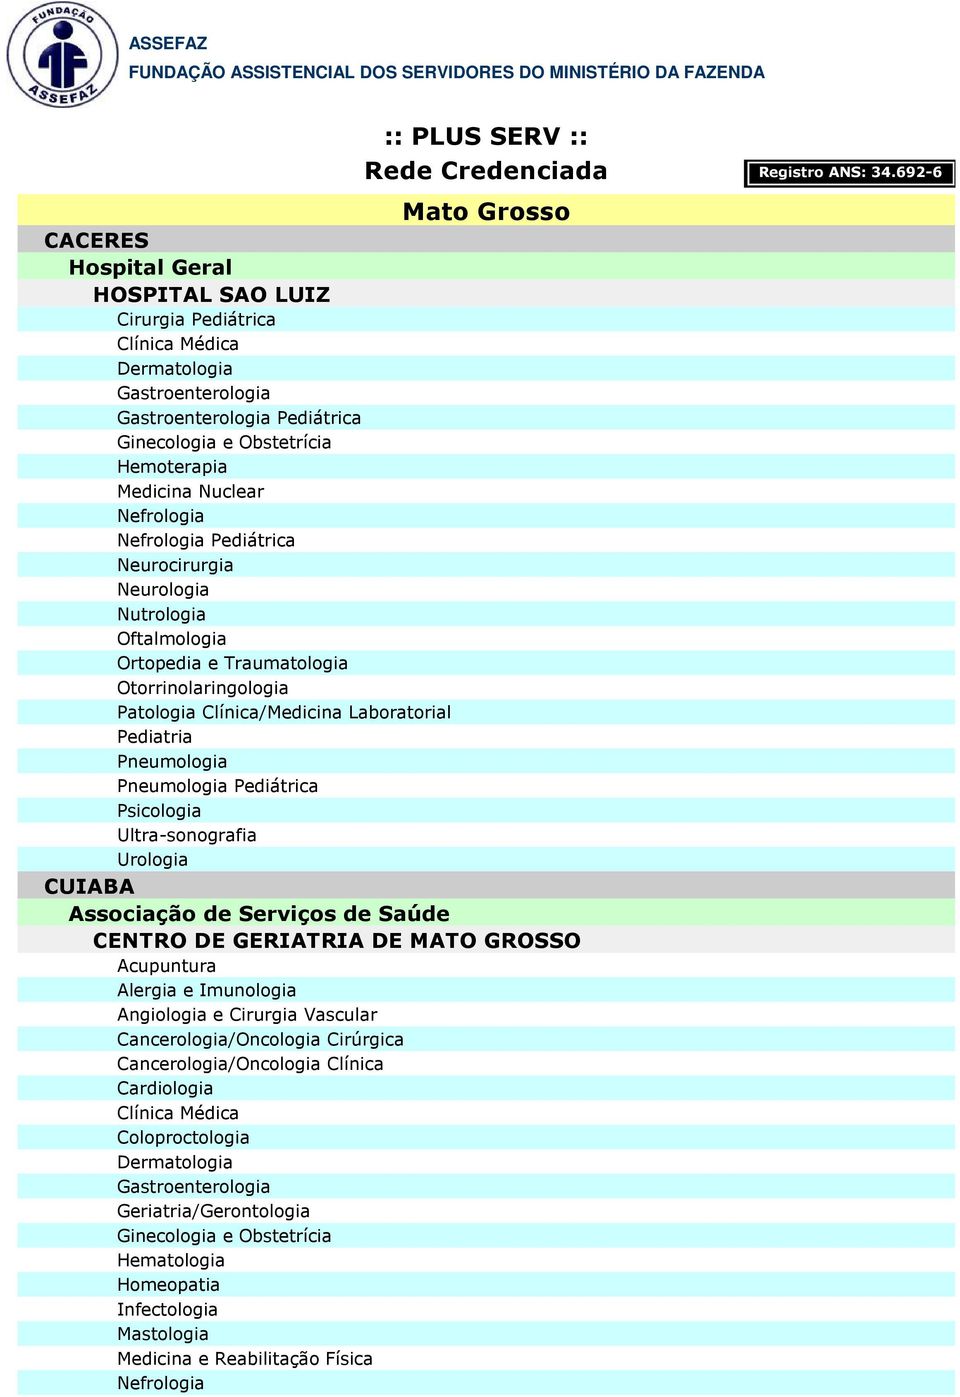 GERIATRIA DE MATO GROSSO Acupuntura Alergia e Imunologia Cancerologia/Oncologia Cirúrgica